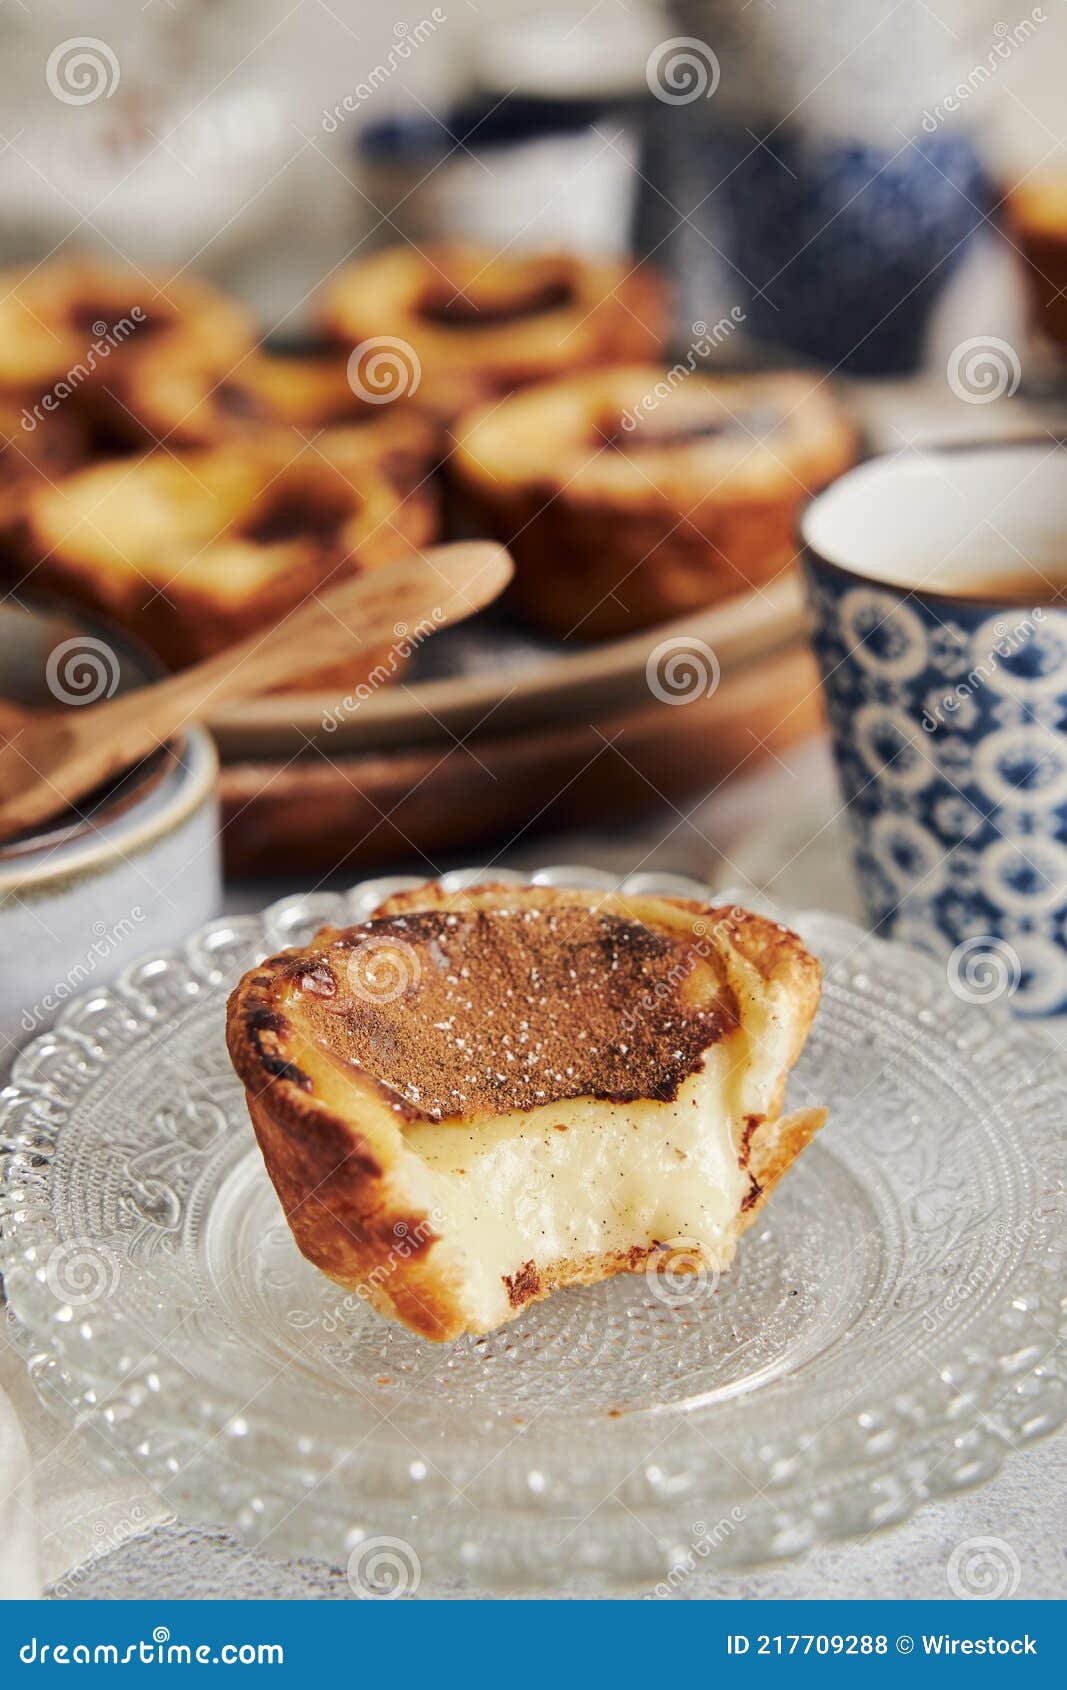 closeup shot of delicious pastel de nata vanilla pastries with espresso on a white table